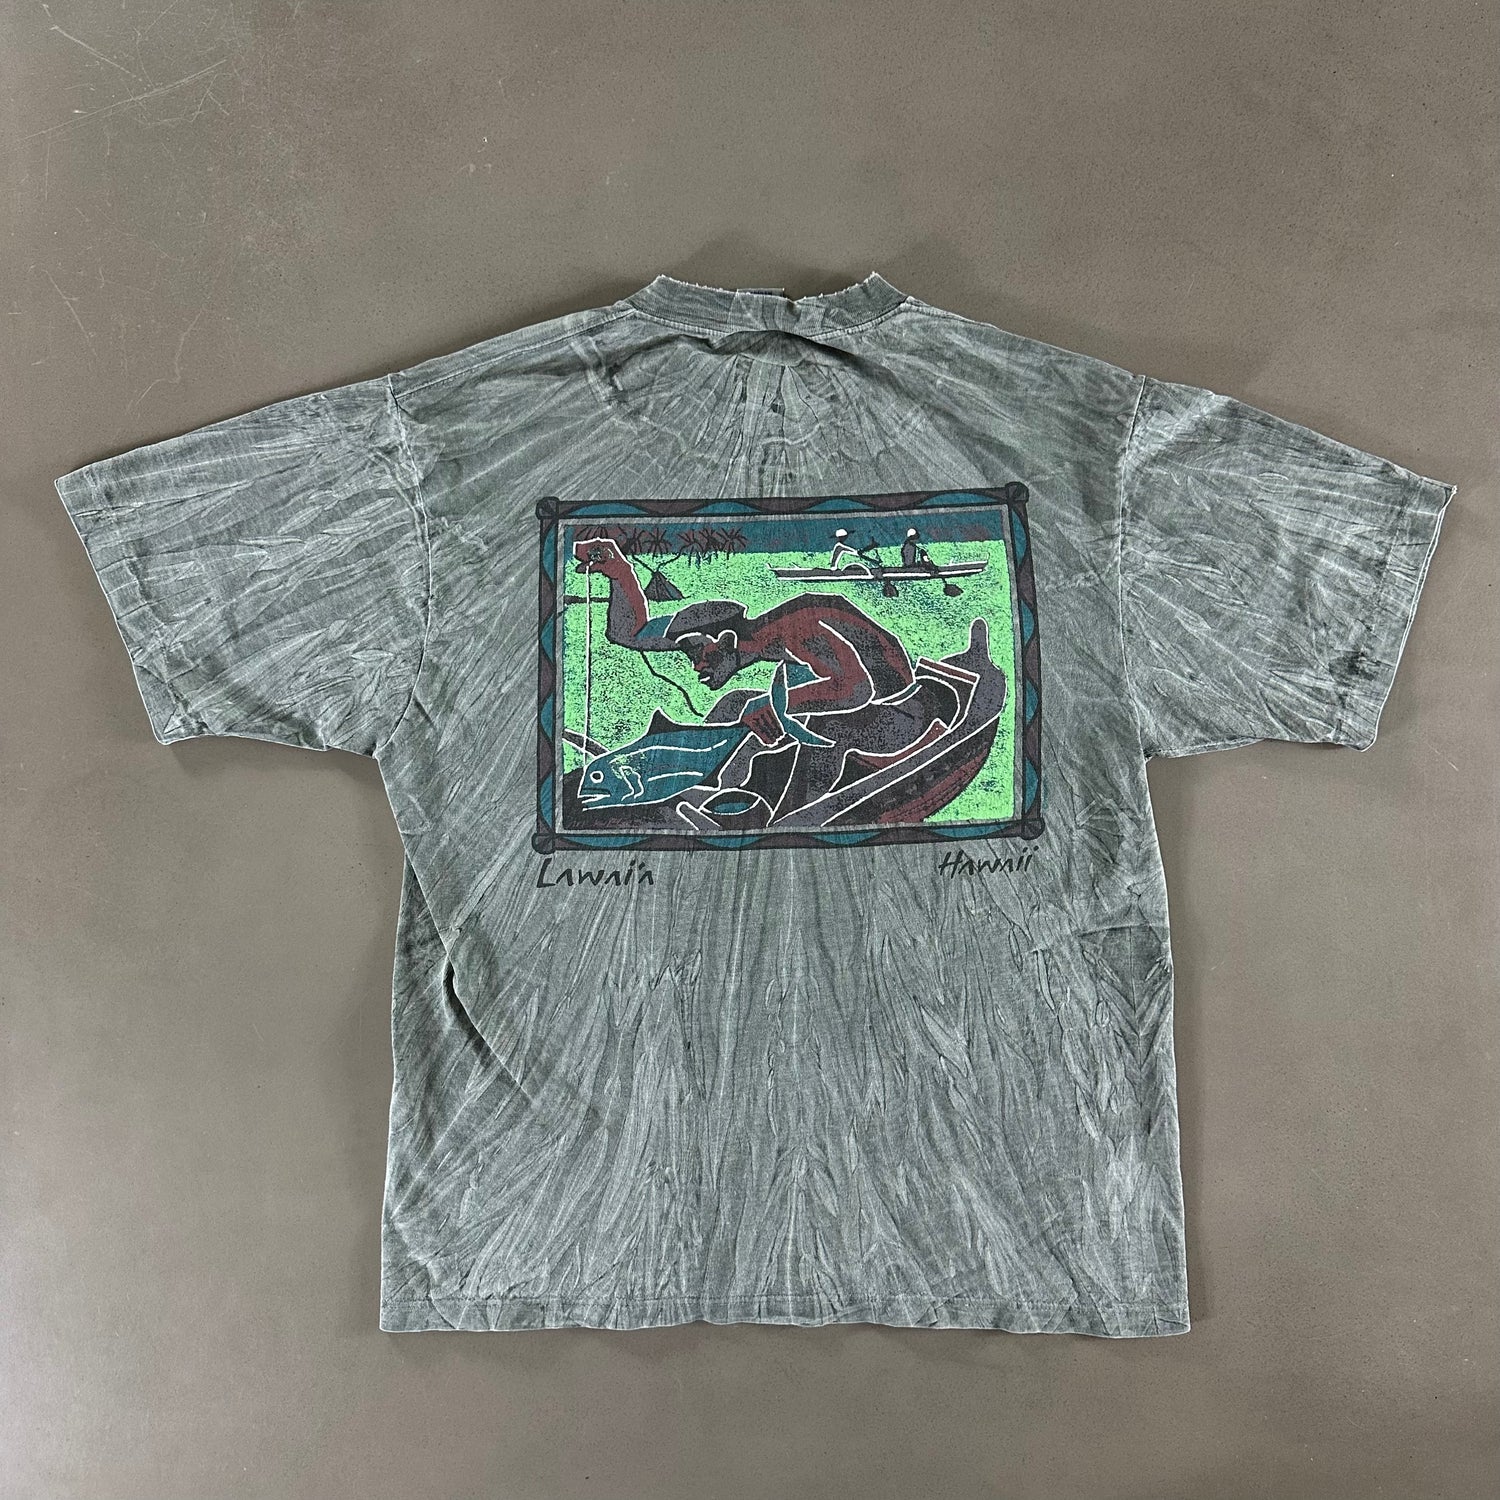 Vintage 1990s Hawaii T-shirt size Medium